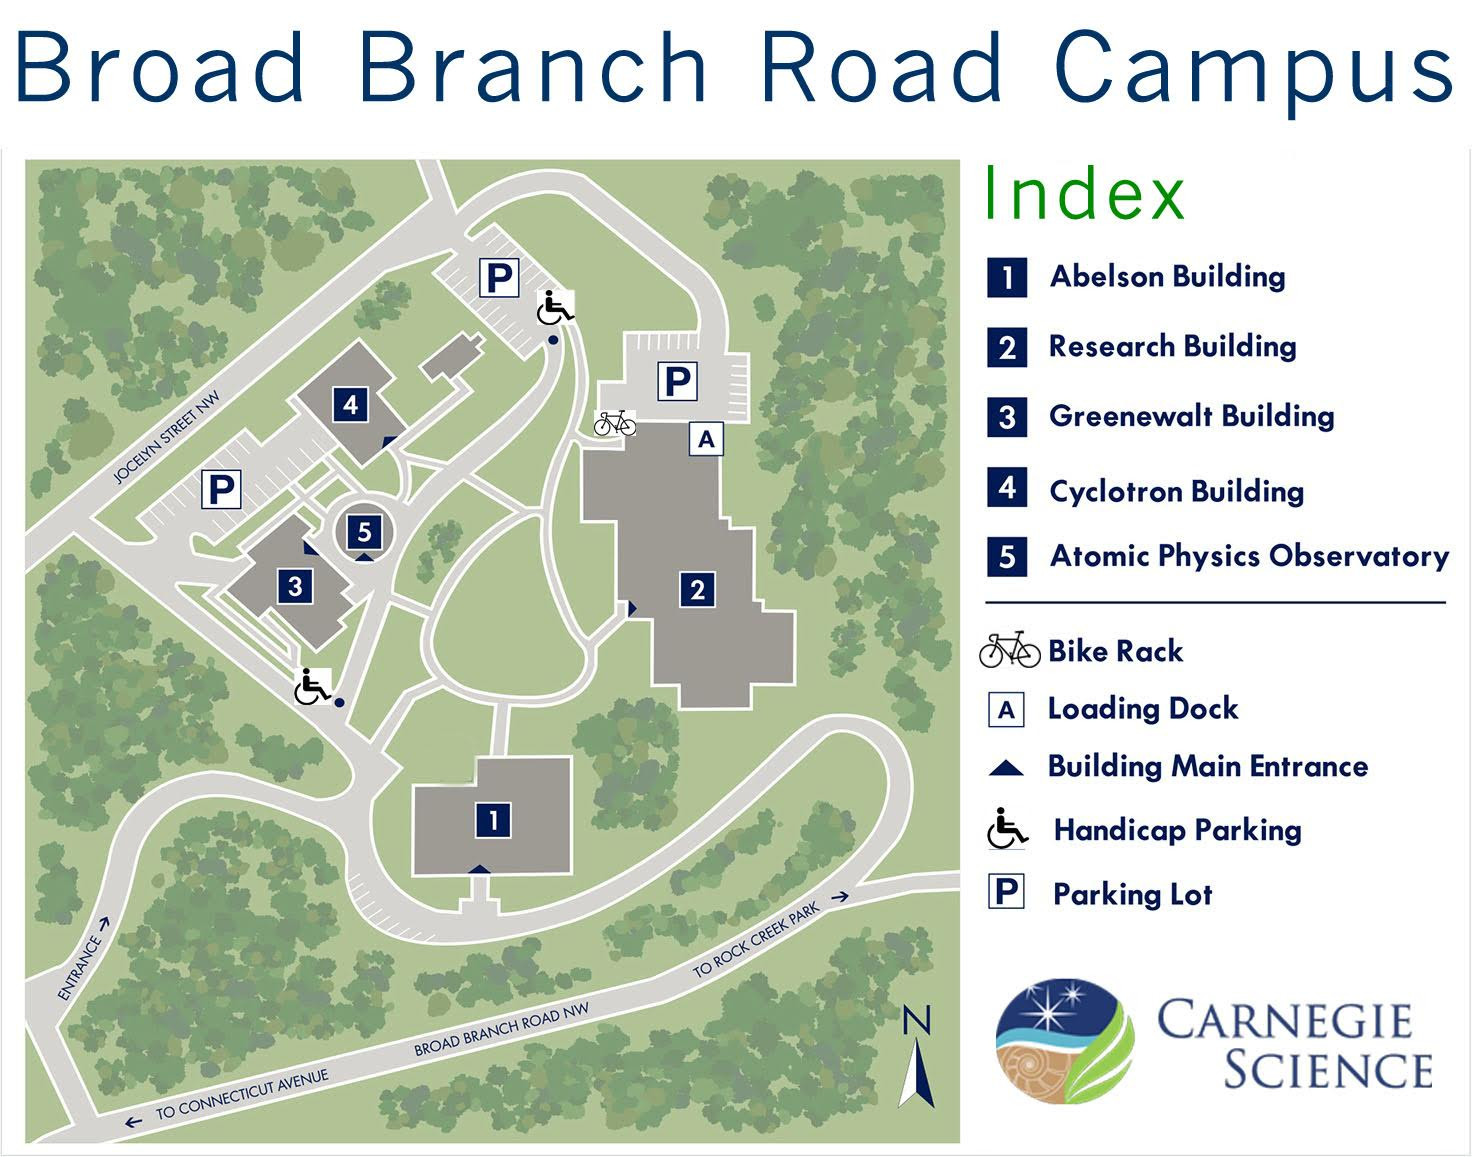 BBR Campus Map with Index